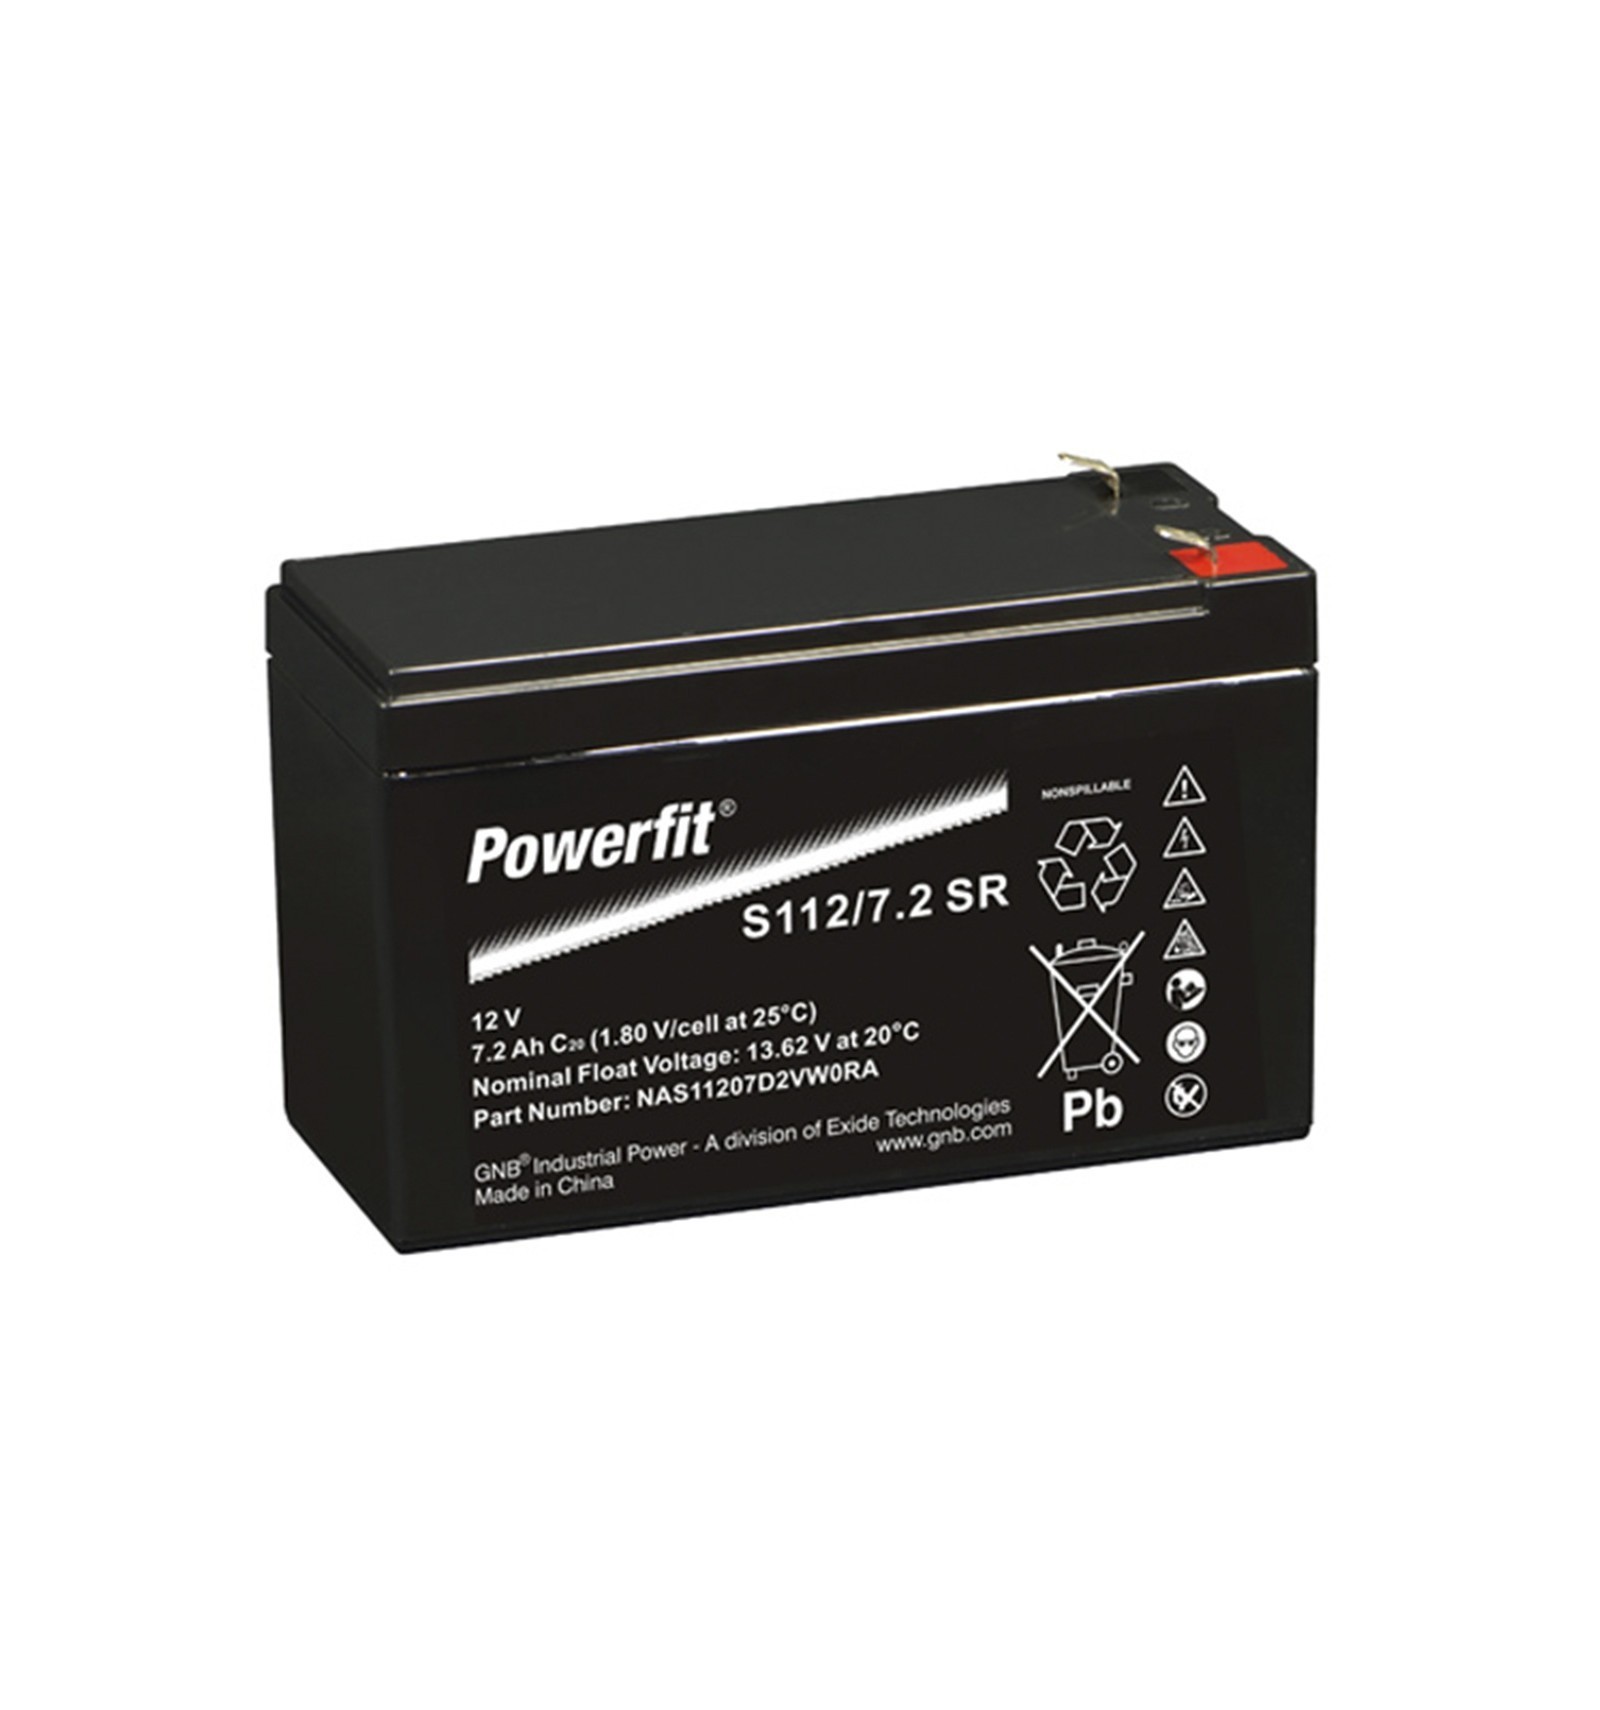 Battery сайт. Powerfit Battery.